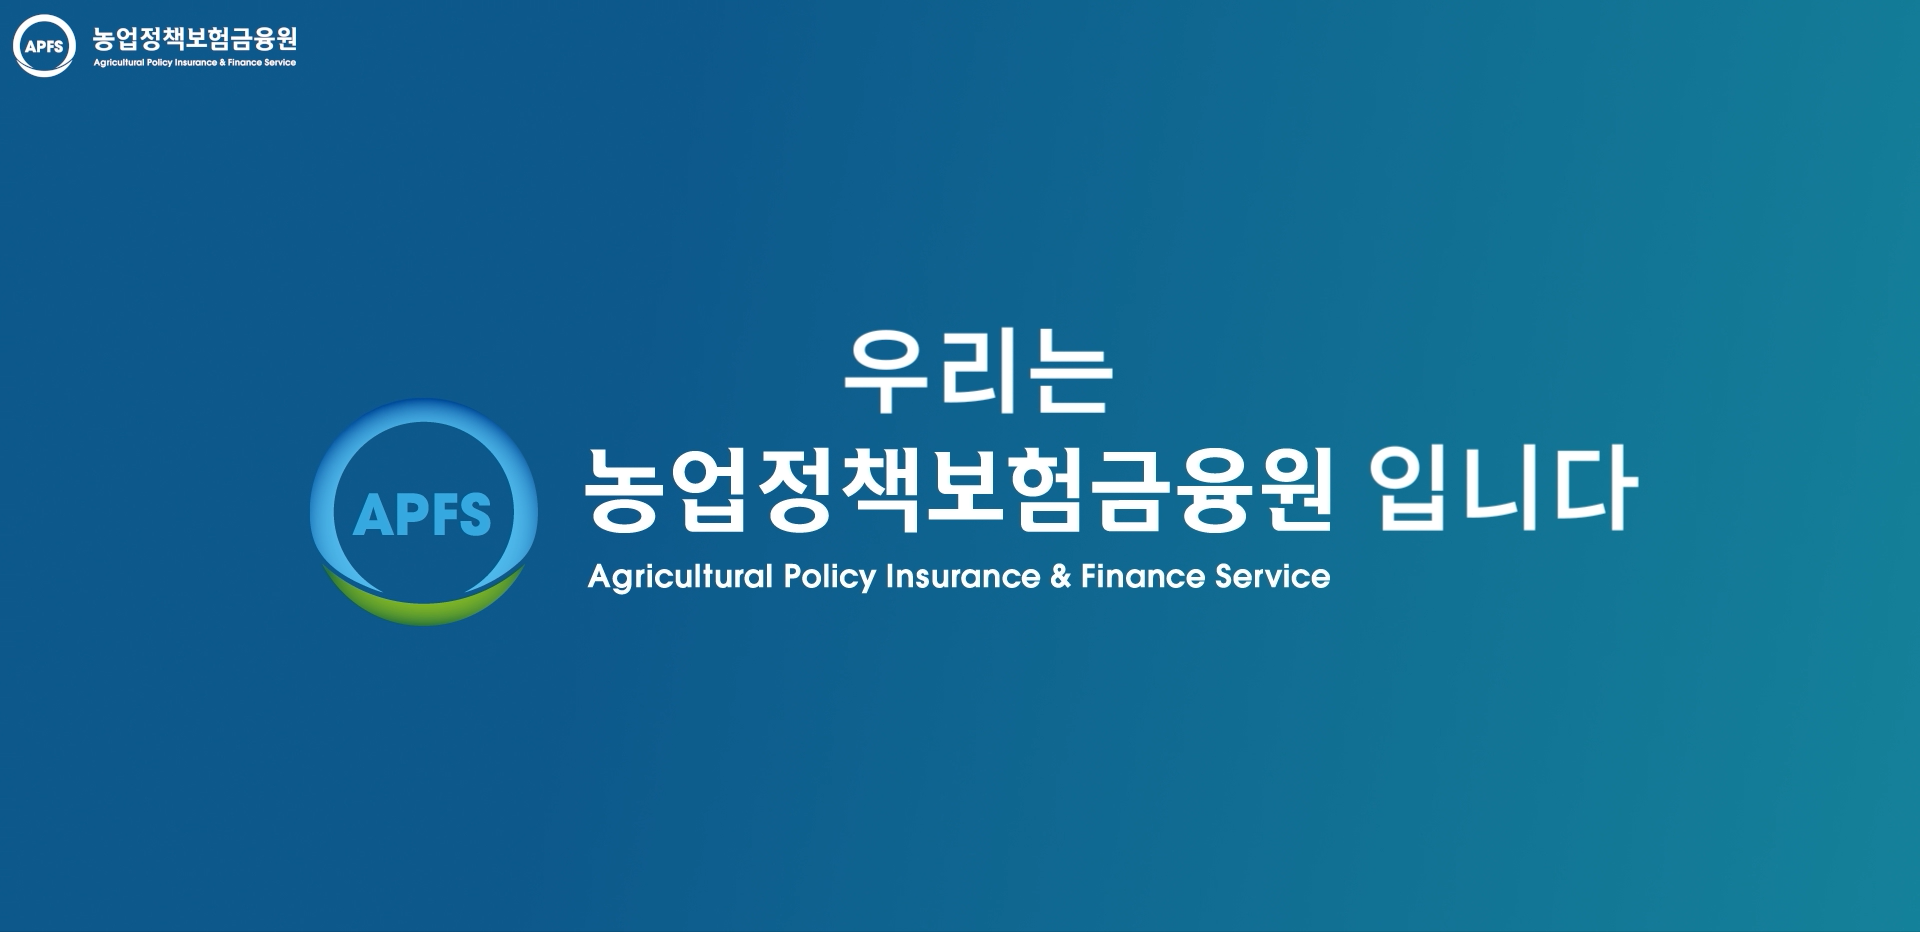 APFS / 우리는 농업정책보험금융원입니다. / Agricultural Policy Insurance & Finance Service